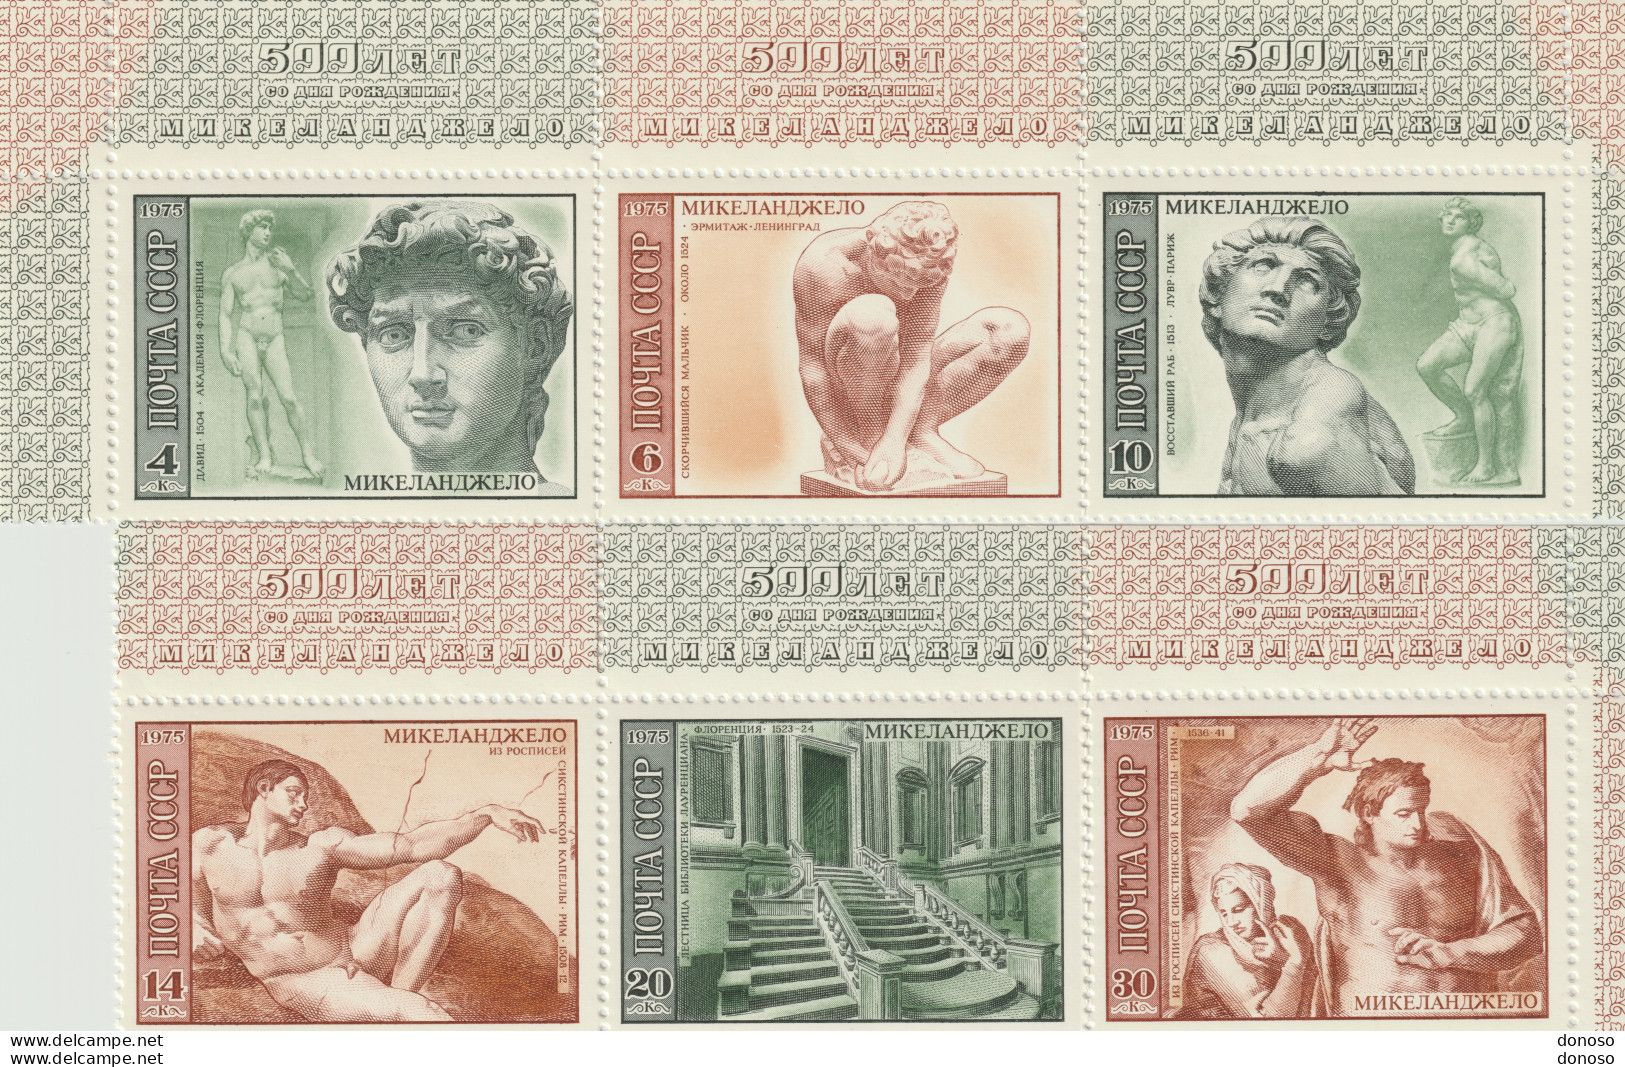 URSS 1975 MICHEL ANGE Yvert 4119-4124 Michel 4329-4334 NEUF** MNH Cote Yv 4,50 Euros - Unused Stamps